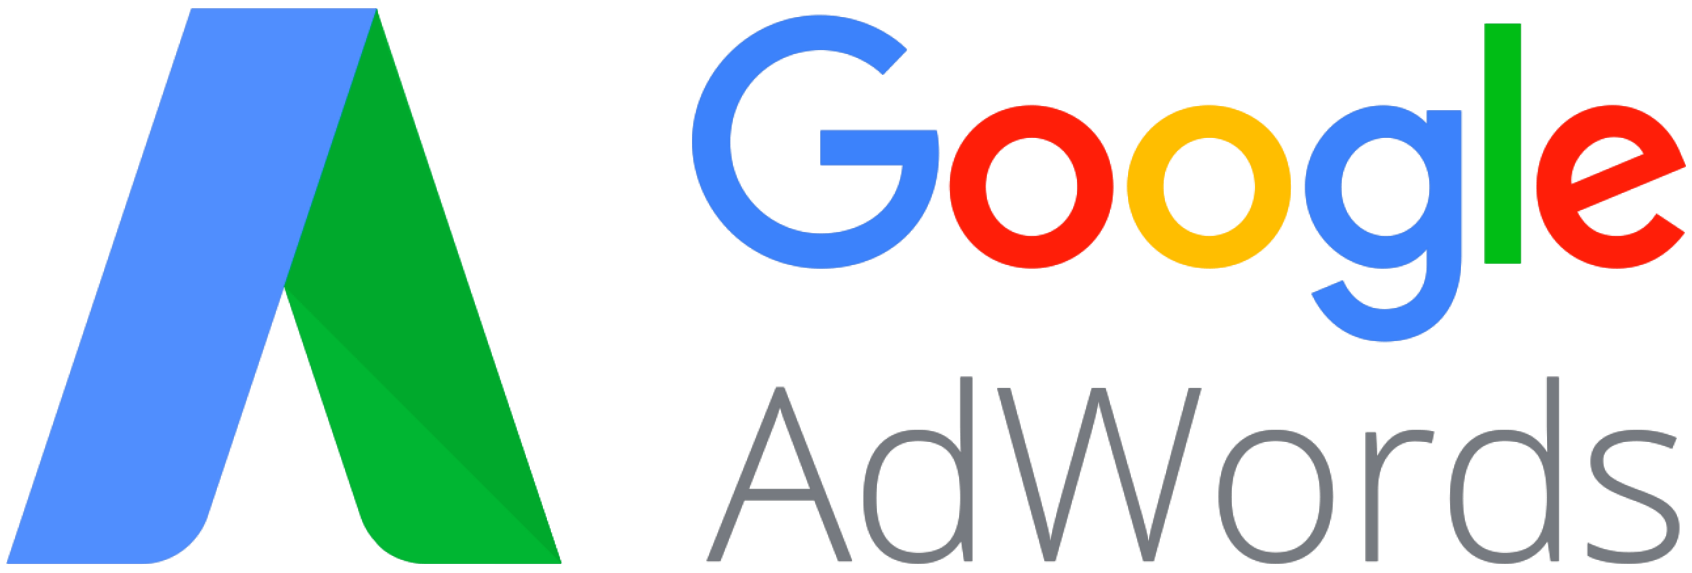 Google AdWords Logo - google-adwords-logo-png-large - Fusing Marketing NYC Digital ...